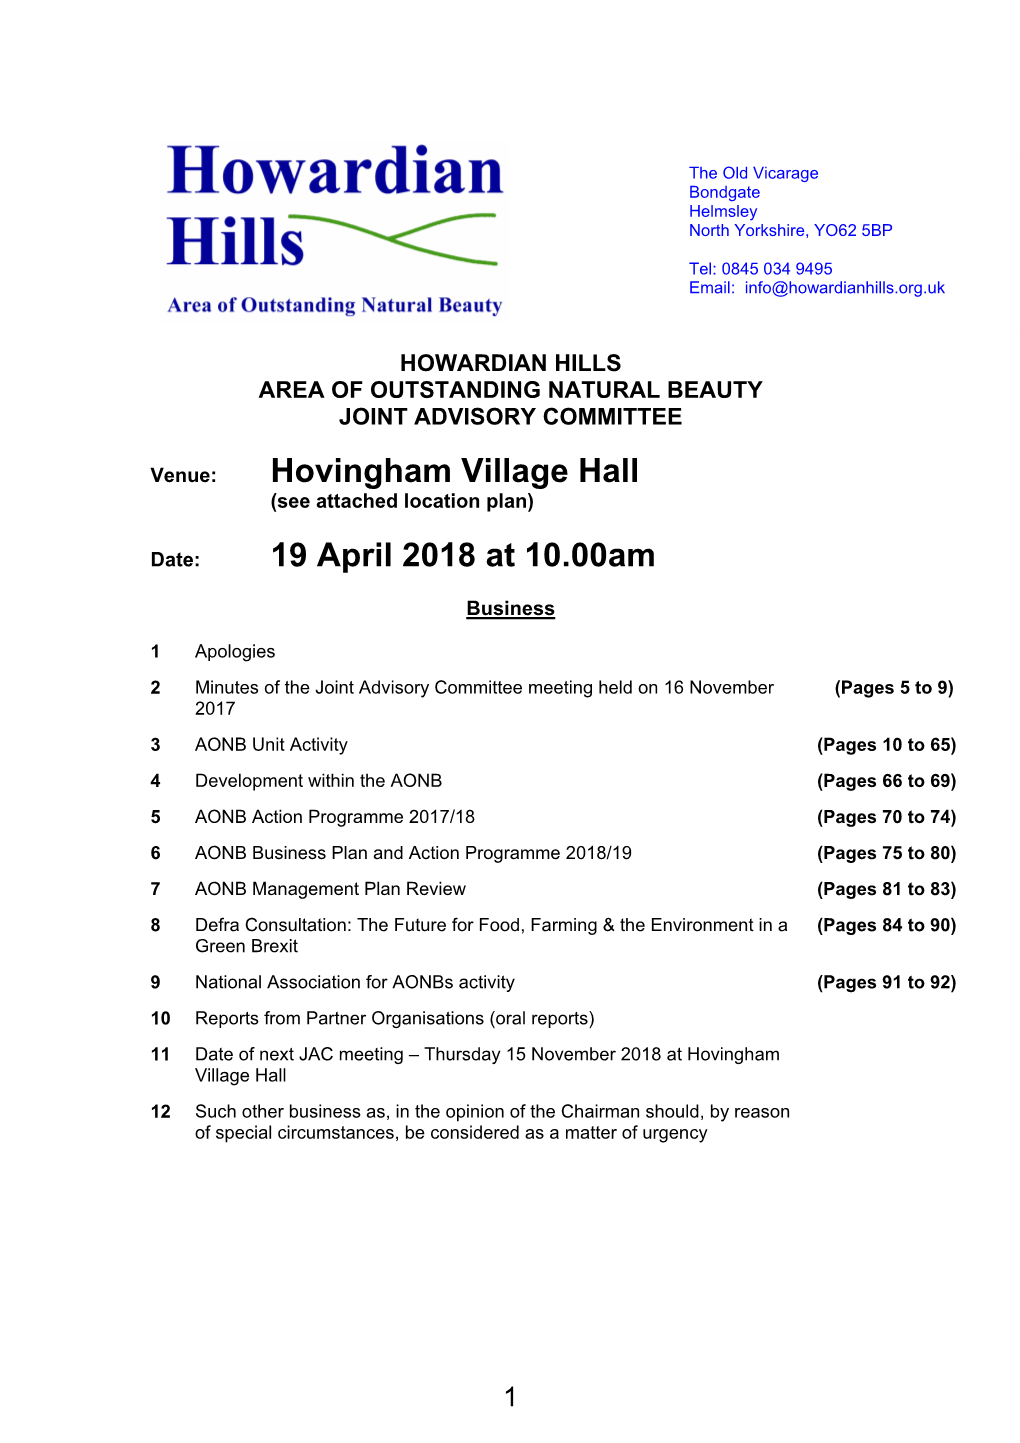 Hovingham Village Hall 19 April 2018 at 10.00Am